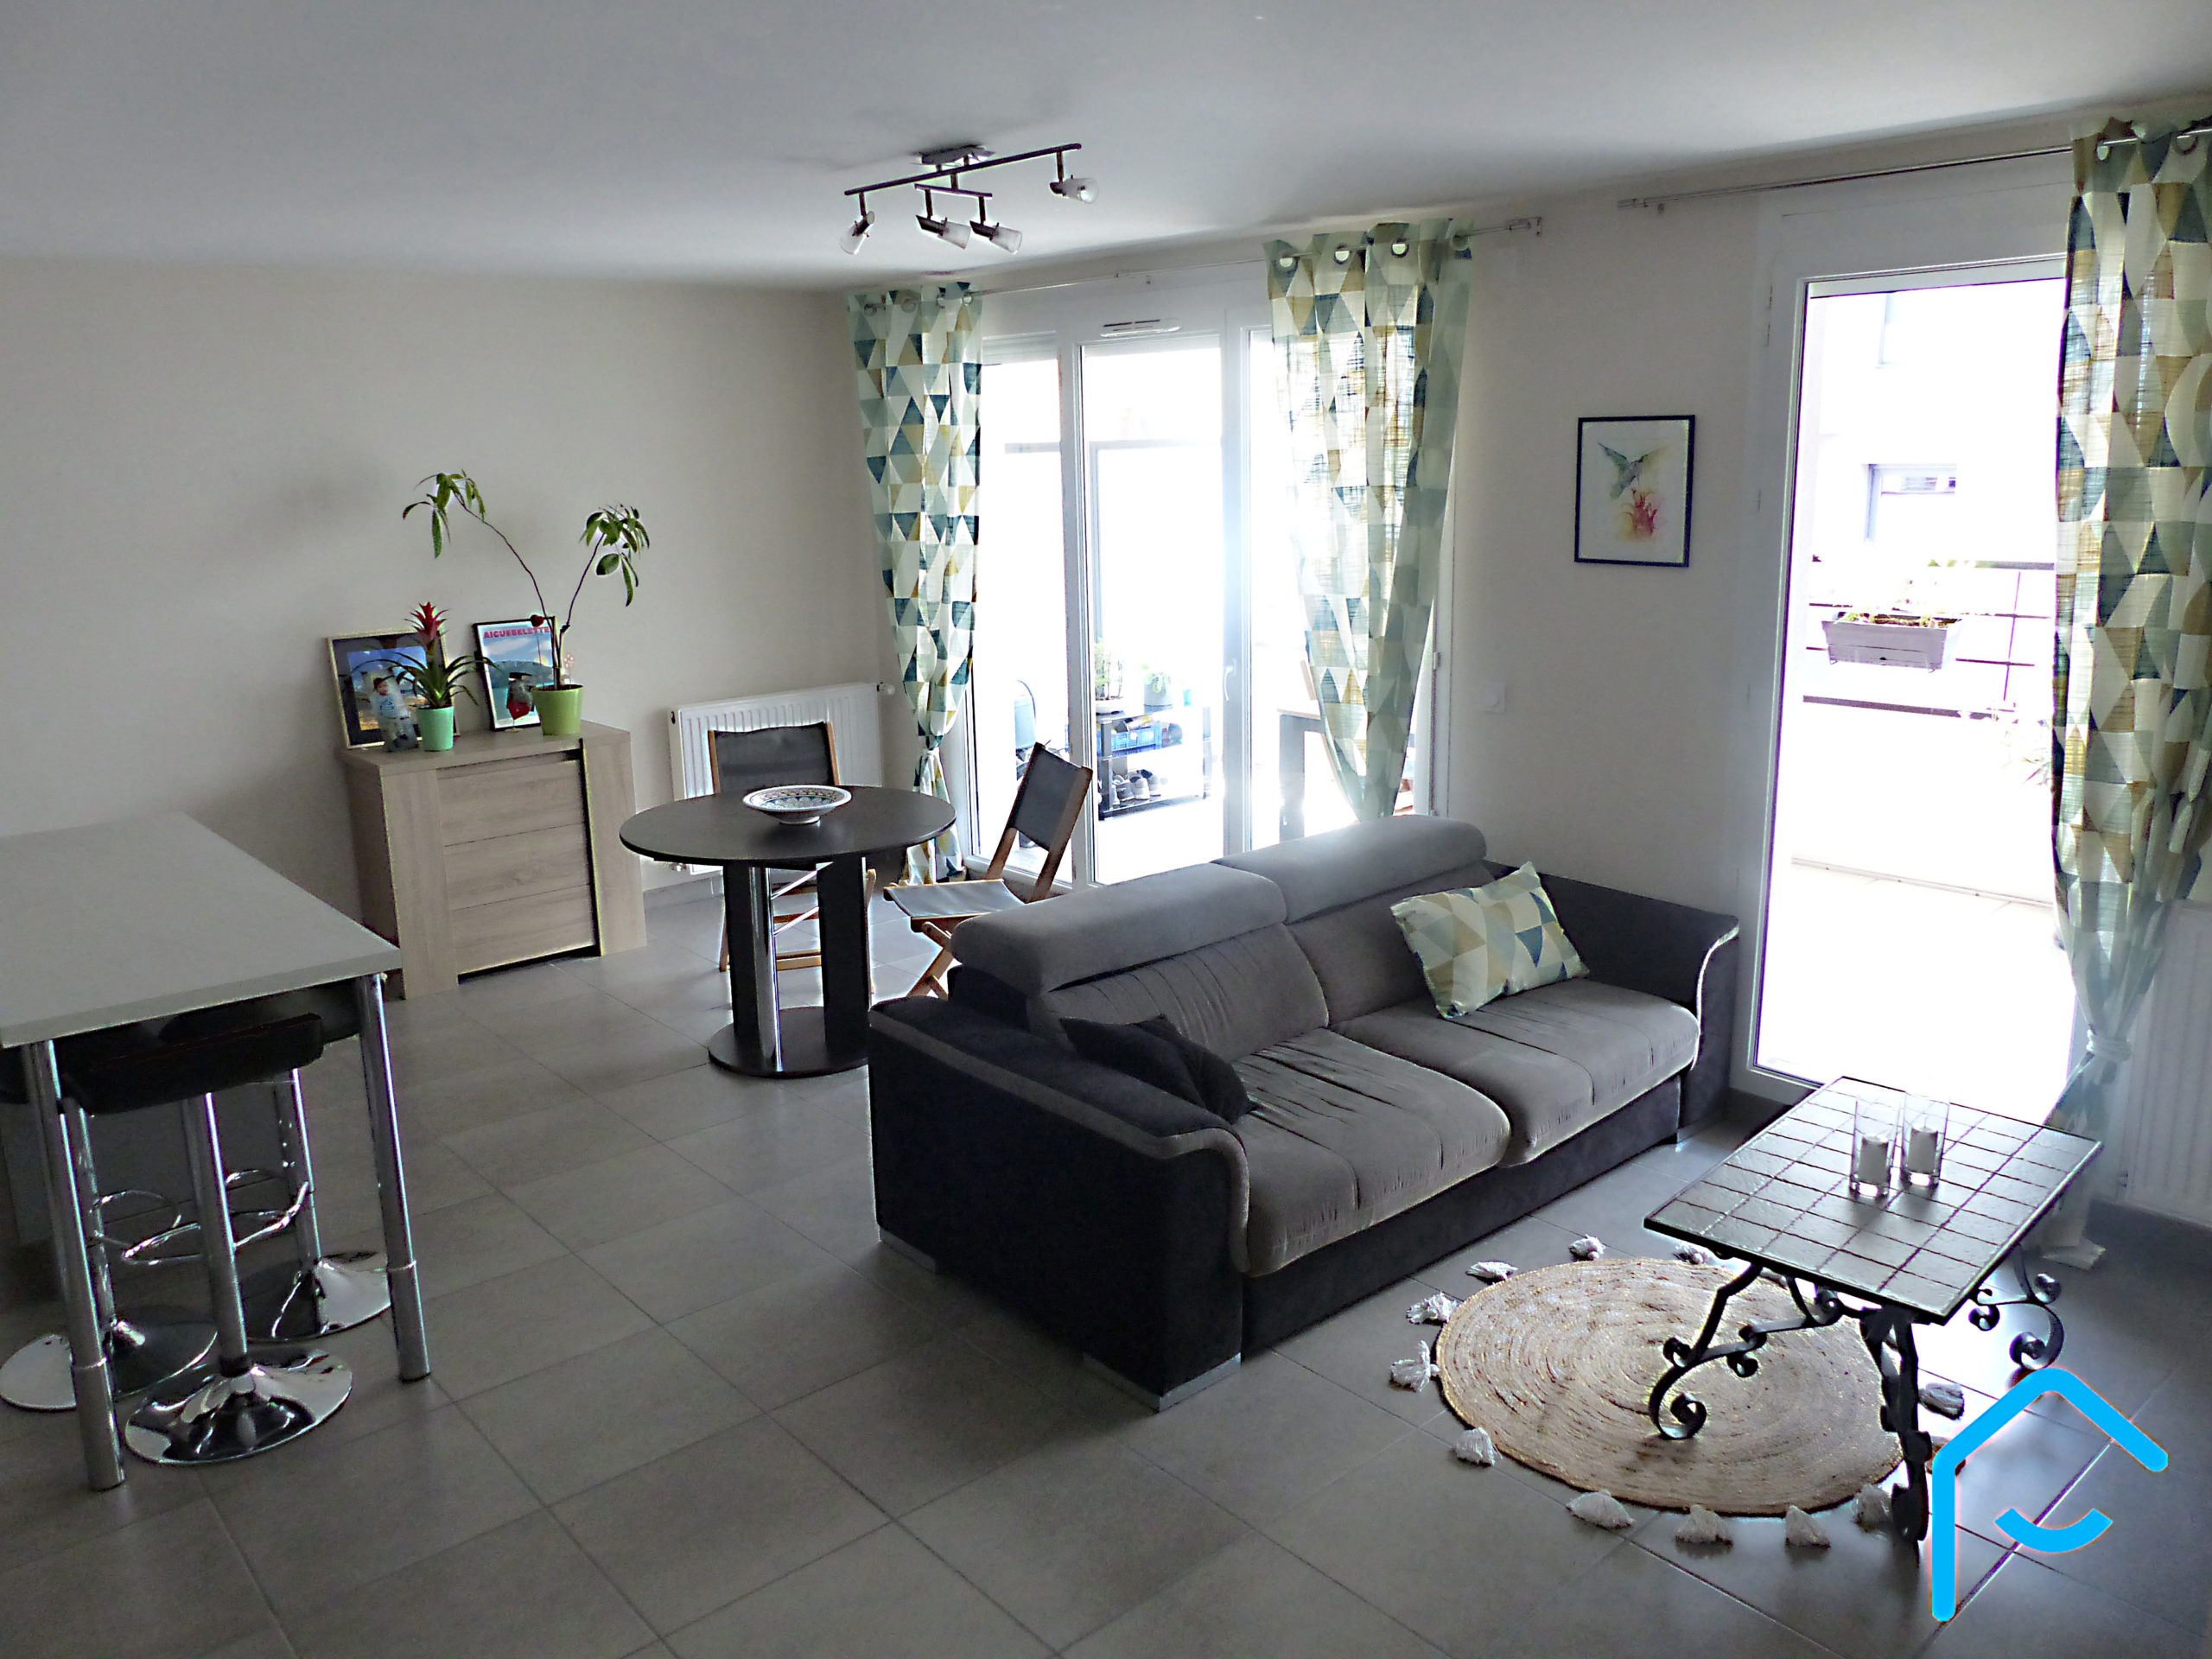 A vendre appartement type T4 Chambéry Savoie terrasse vue 1